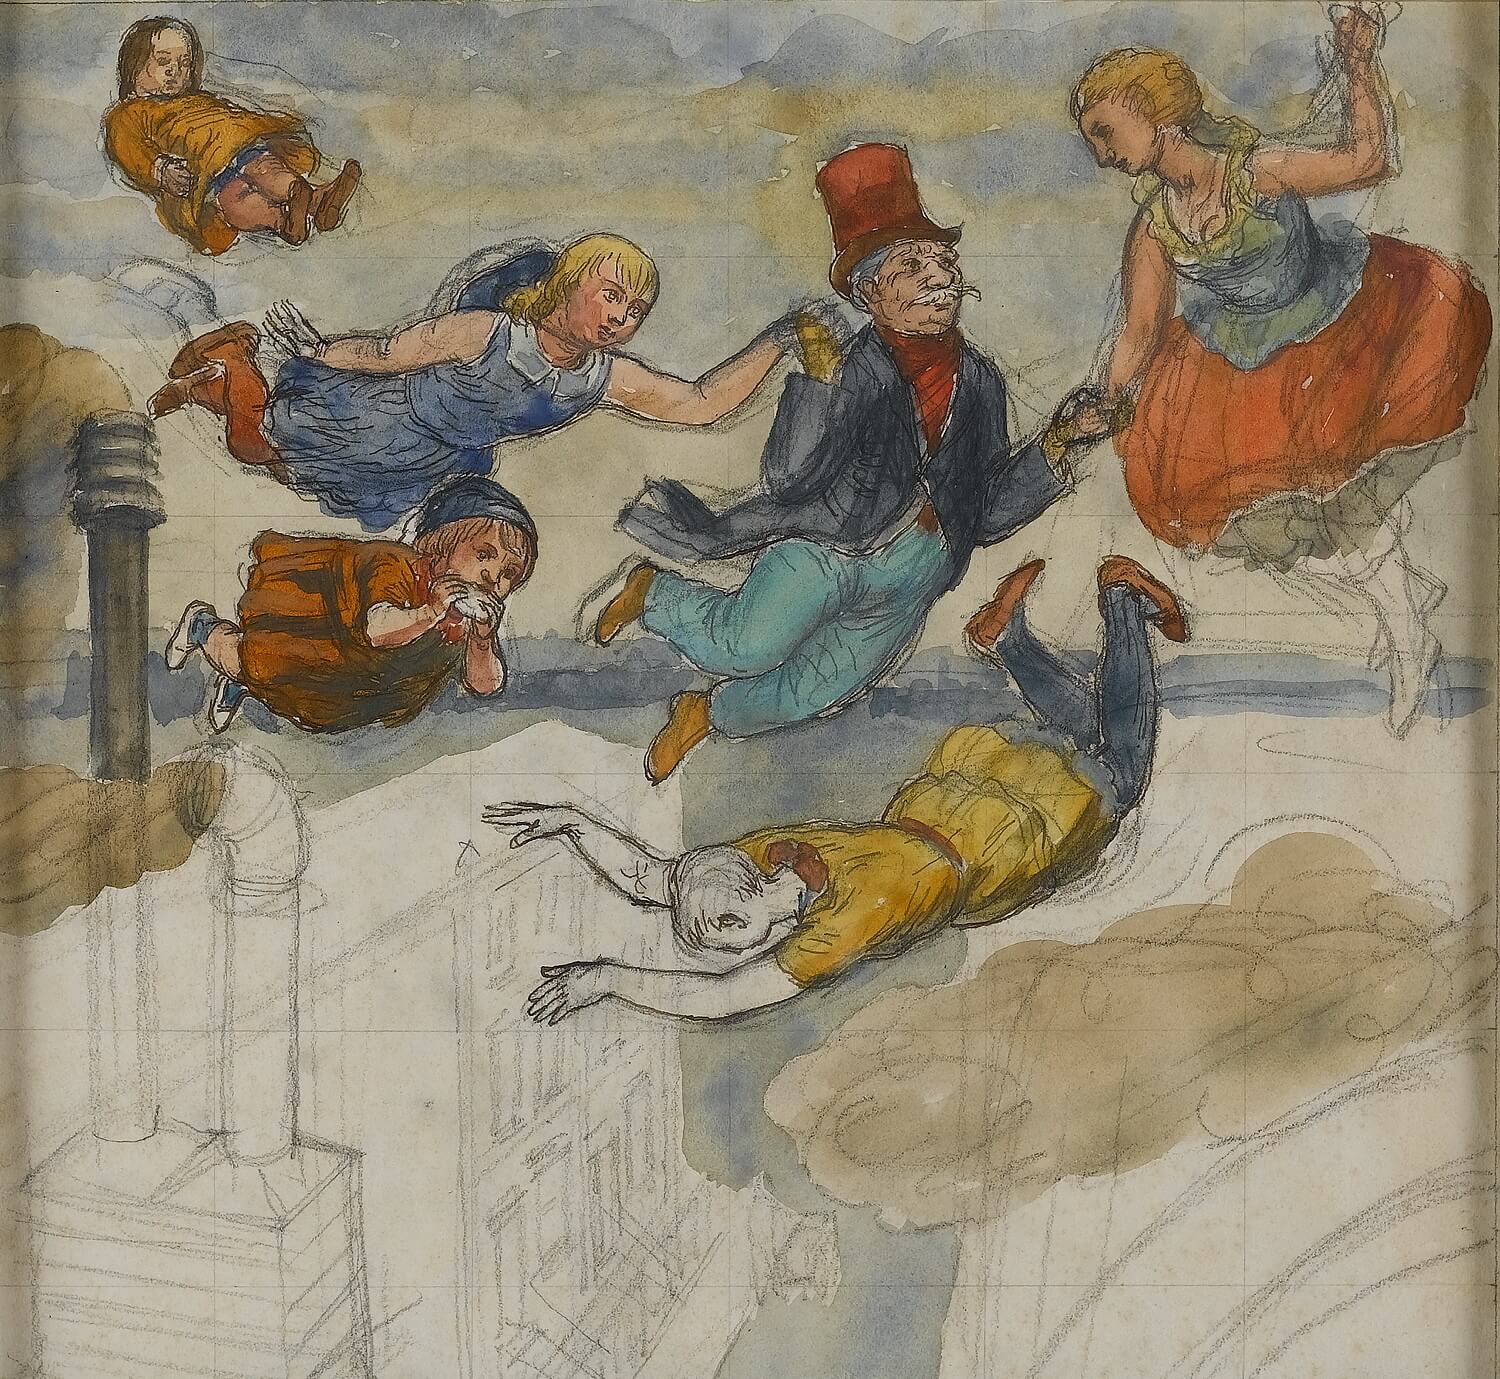 Charles Mahoney - Illustration to Children's fable